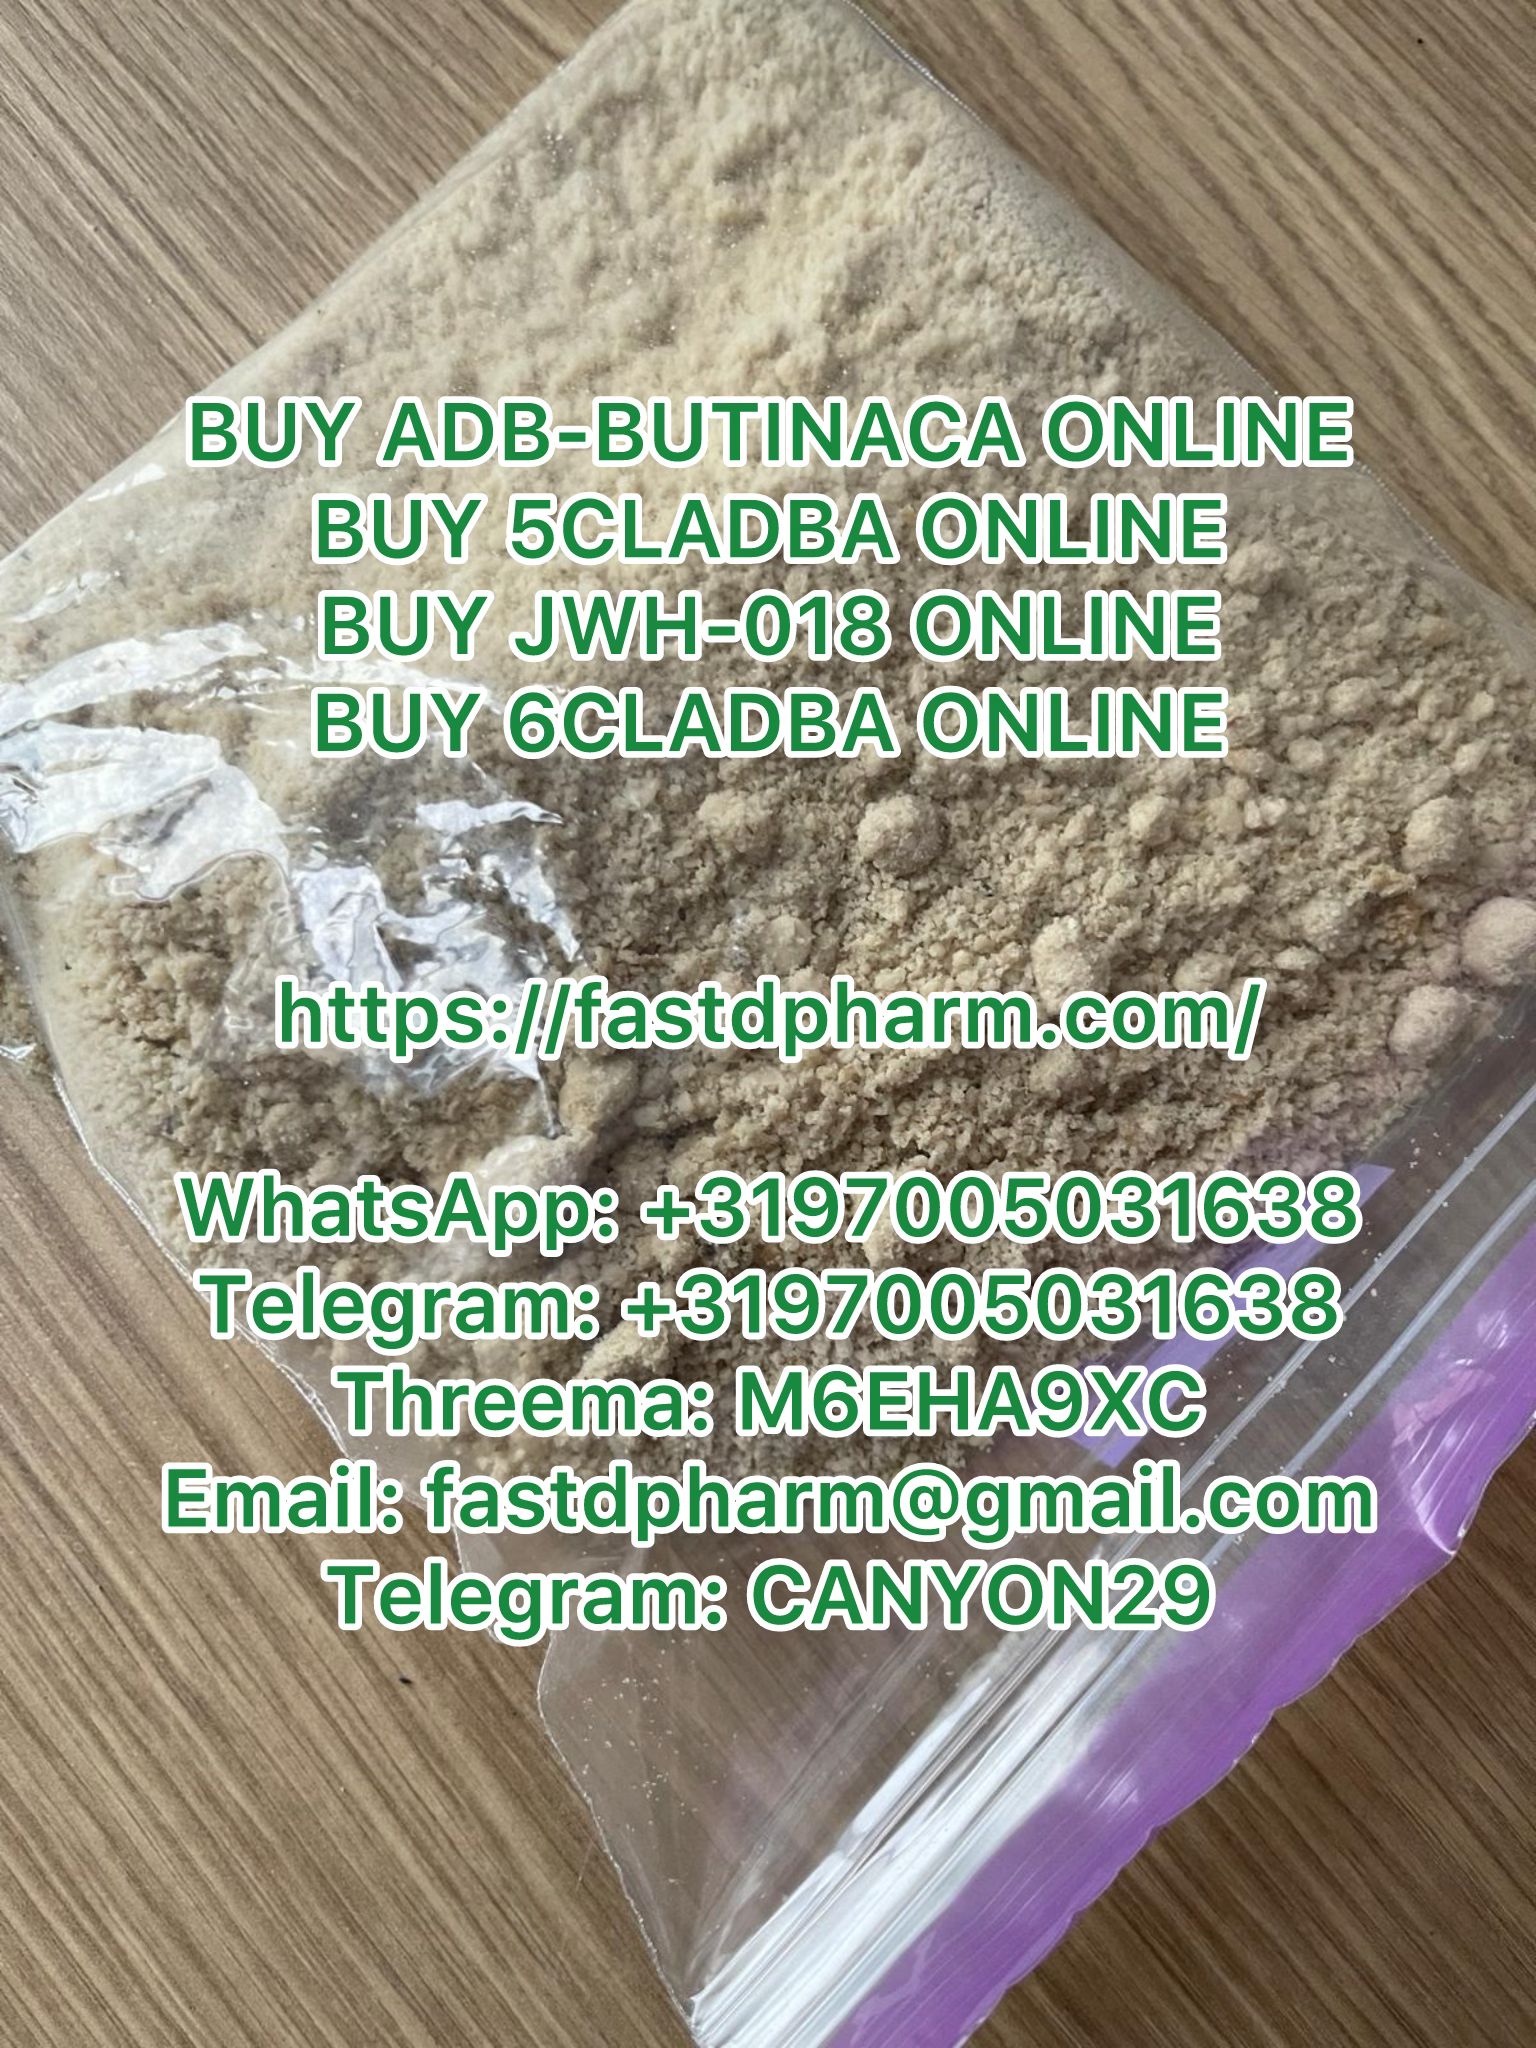 5cladba-for-sale-online-buy-5cladba-online-buy-5cladba-precursor-online-order-5cladba-online-telegram-canyon29-113356